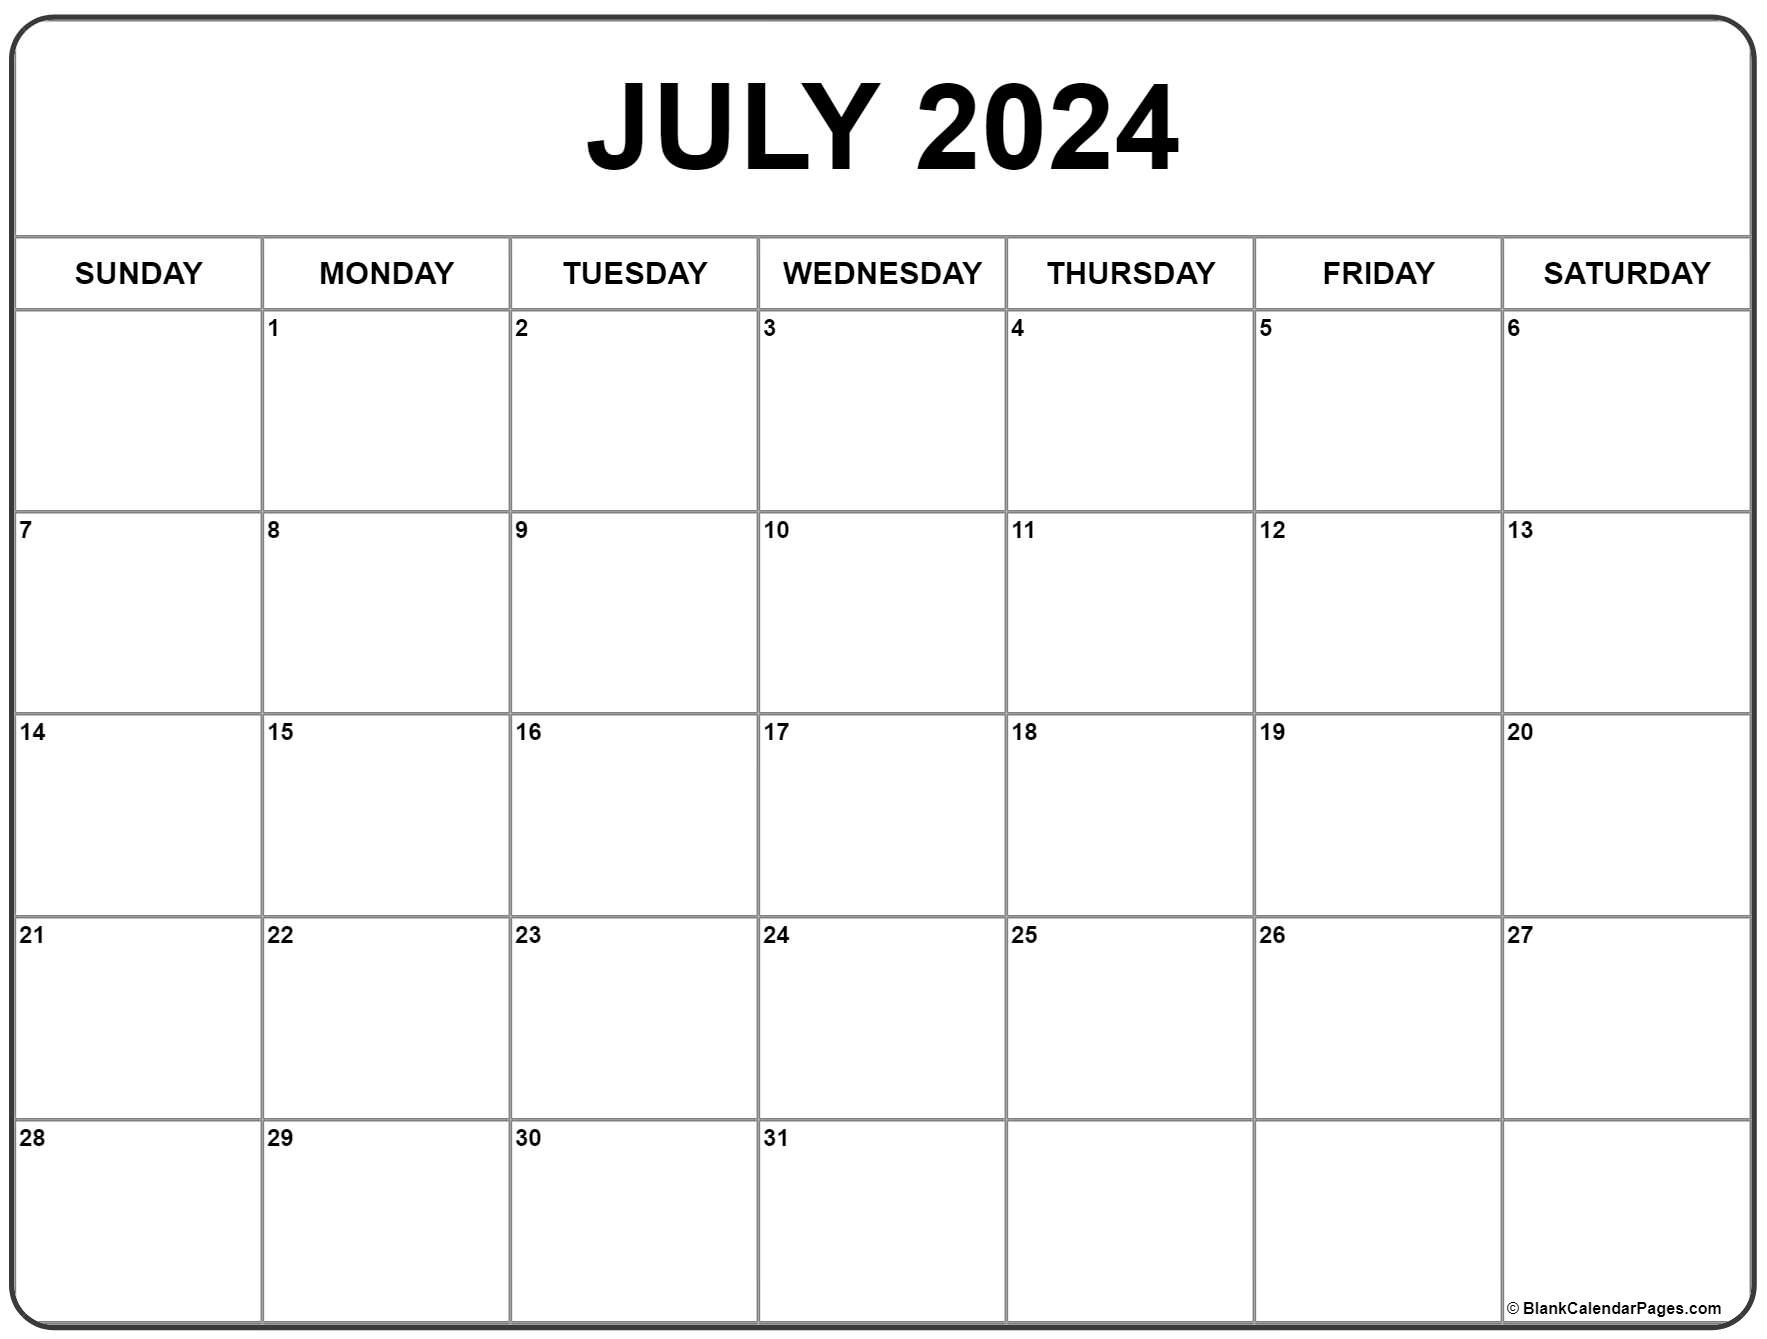 July 2024 Calendar | Free Printable Calendar for July Free Printable Calendar 2024